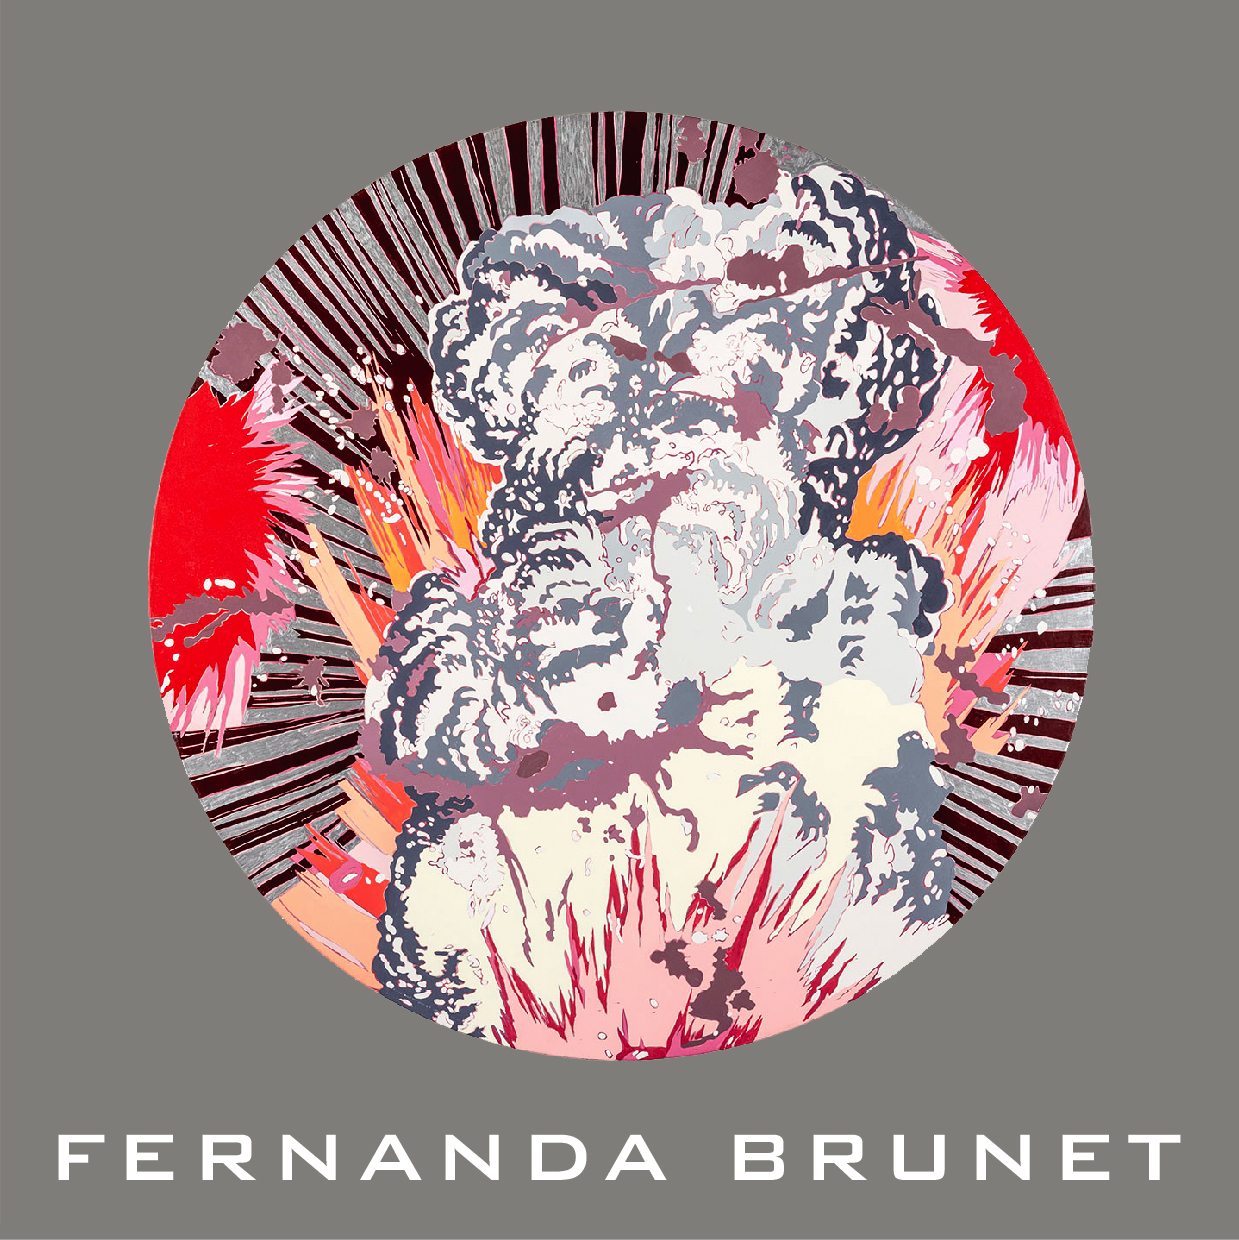 Fernanda Brunet